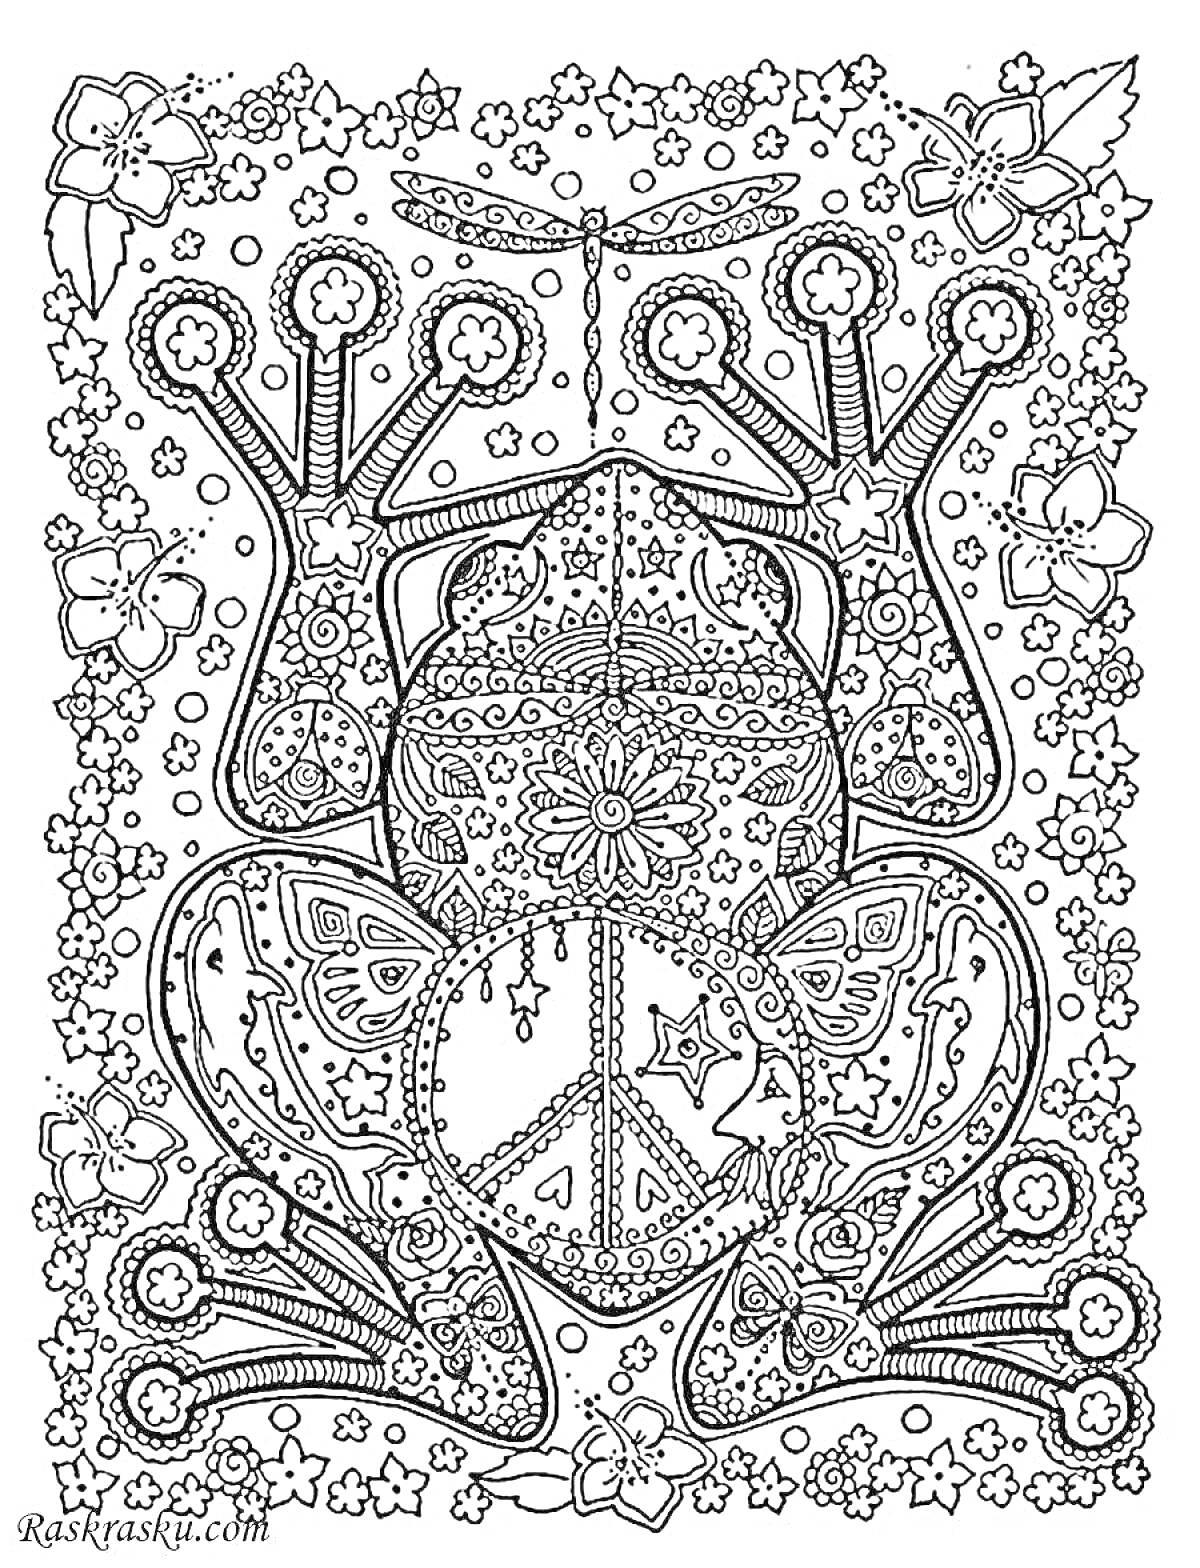 Раскраска Лягушка с узорами на теле, сидящая среди цветов и бабочек, с изображением знака мира на животе и стрекозой над головой